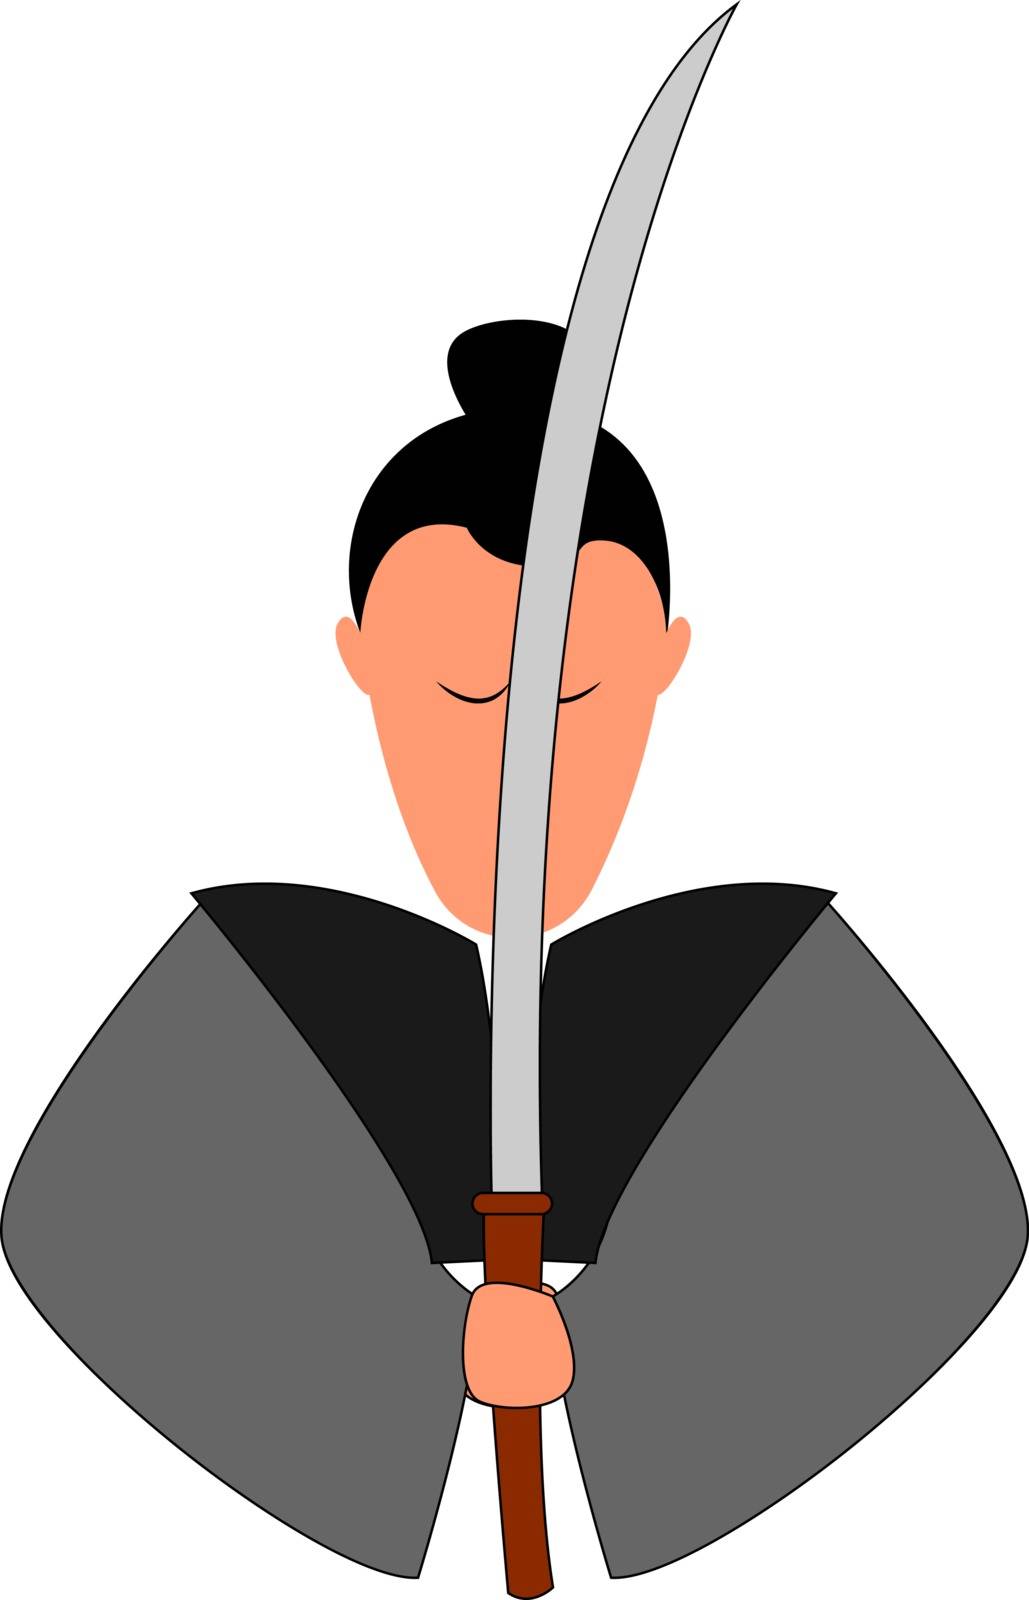 Samurai with katana, illustration, vector on white background.